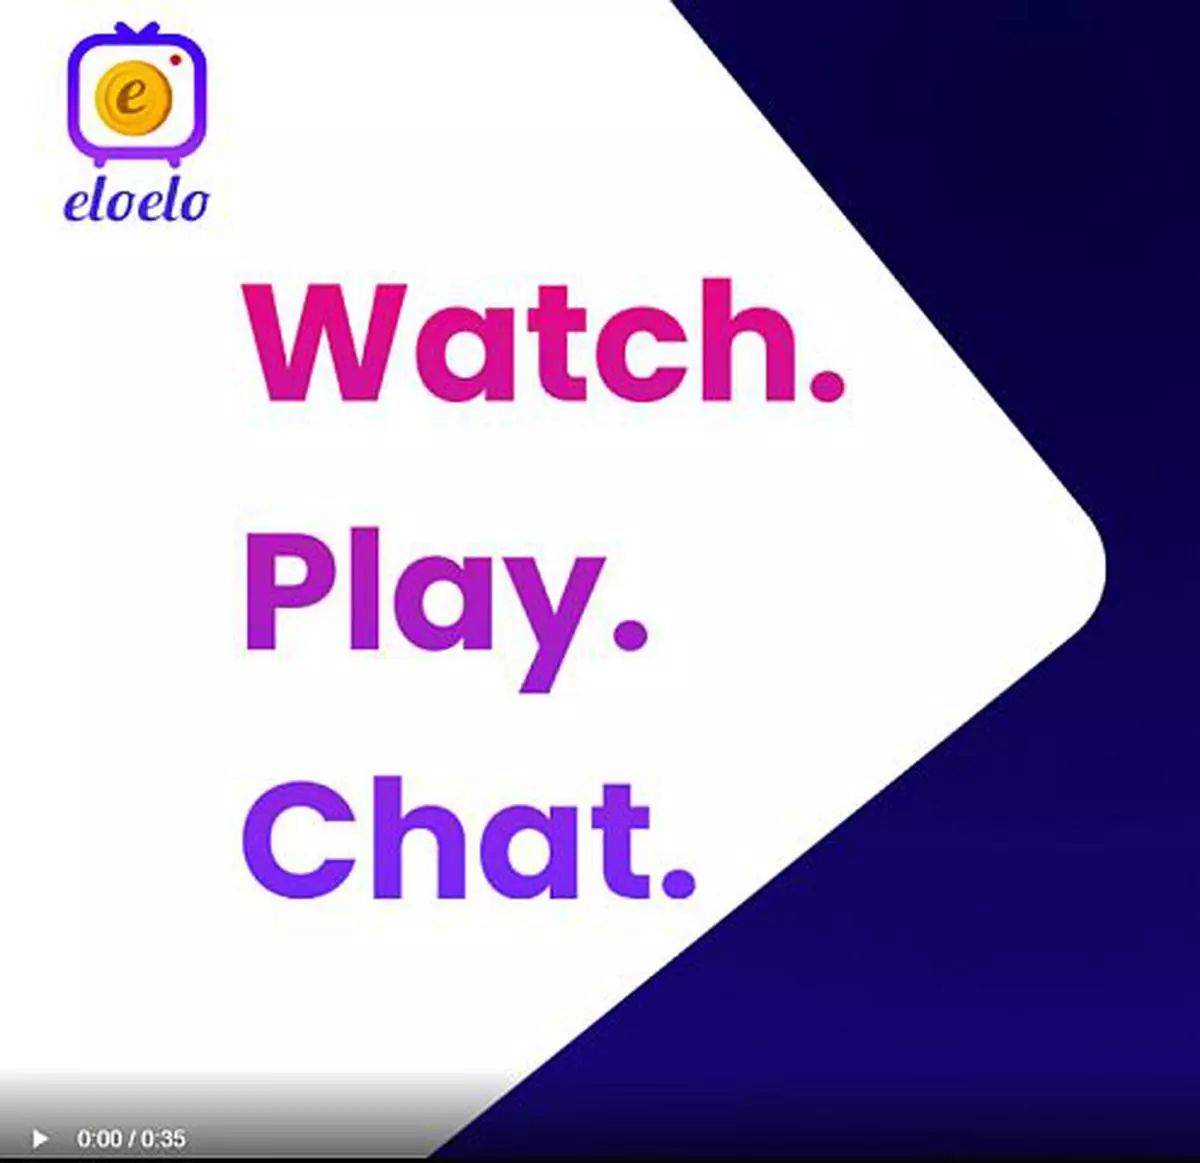 Eloelo crosses 50 Million Gameplays on its Creator-driven Live Social  Gaming App